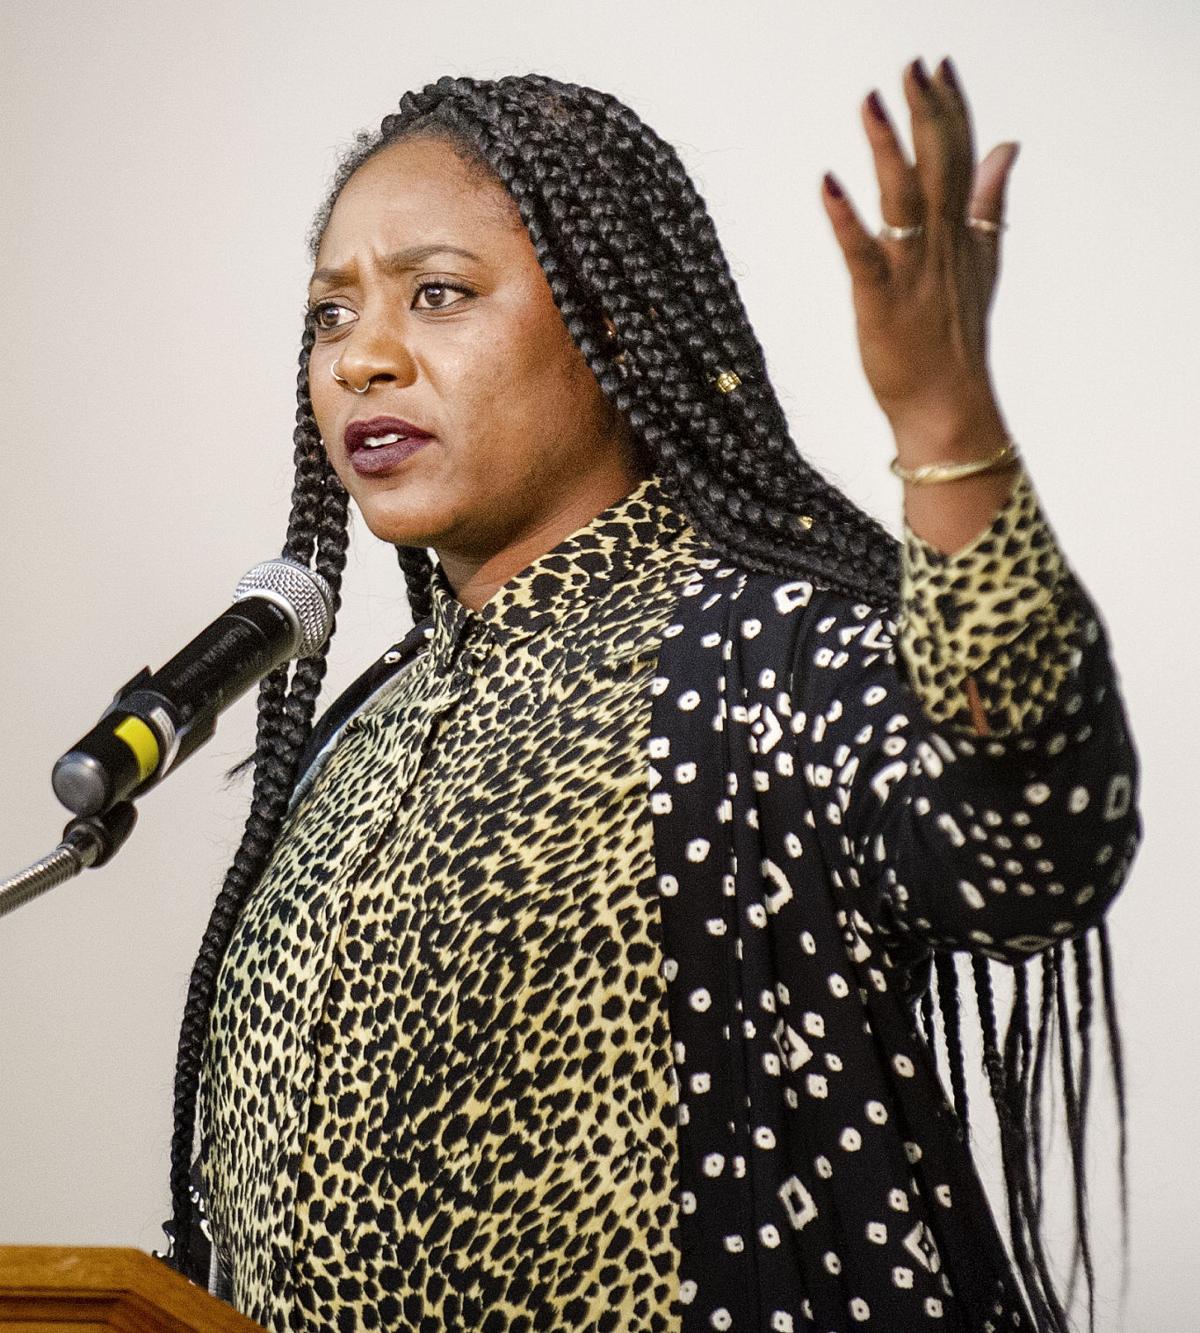 Black Lives Matter Co-Founder Speaks At Unl | Education | Journalstar.com